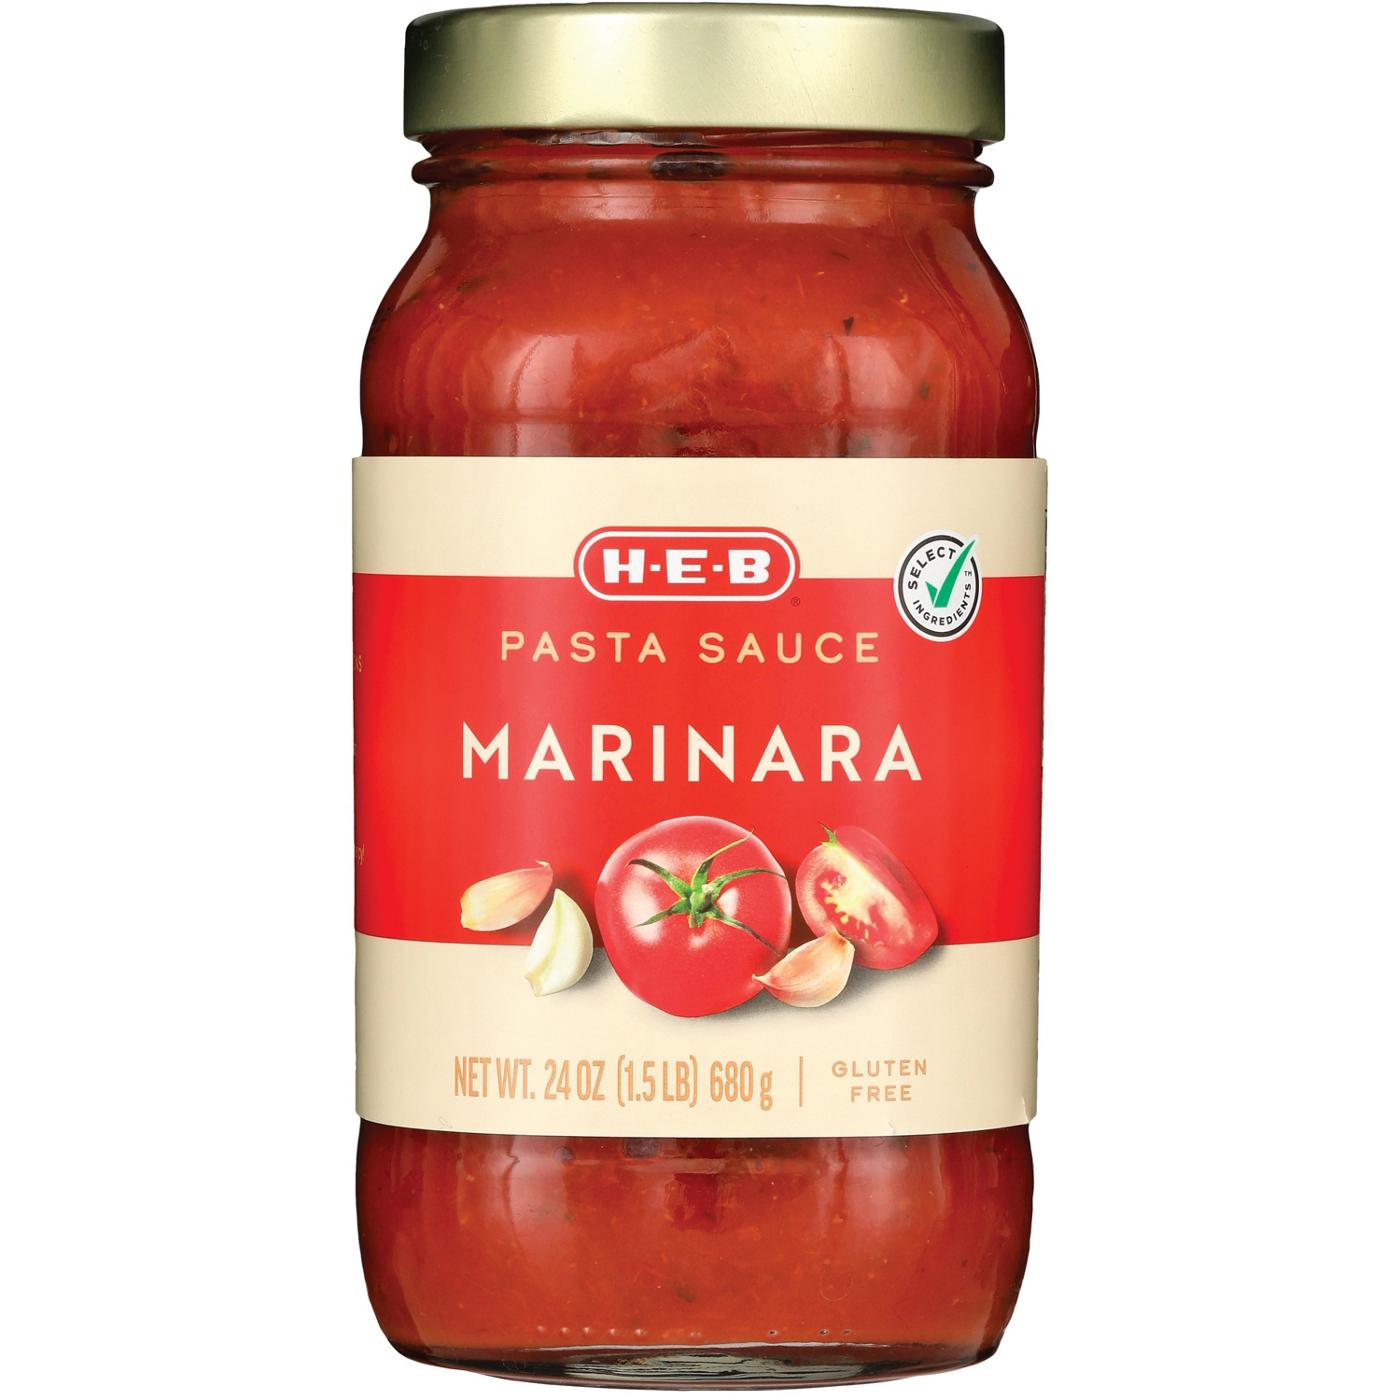 H-E-B Marinara Pasta Sauce; image 1 of 2